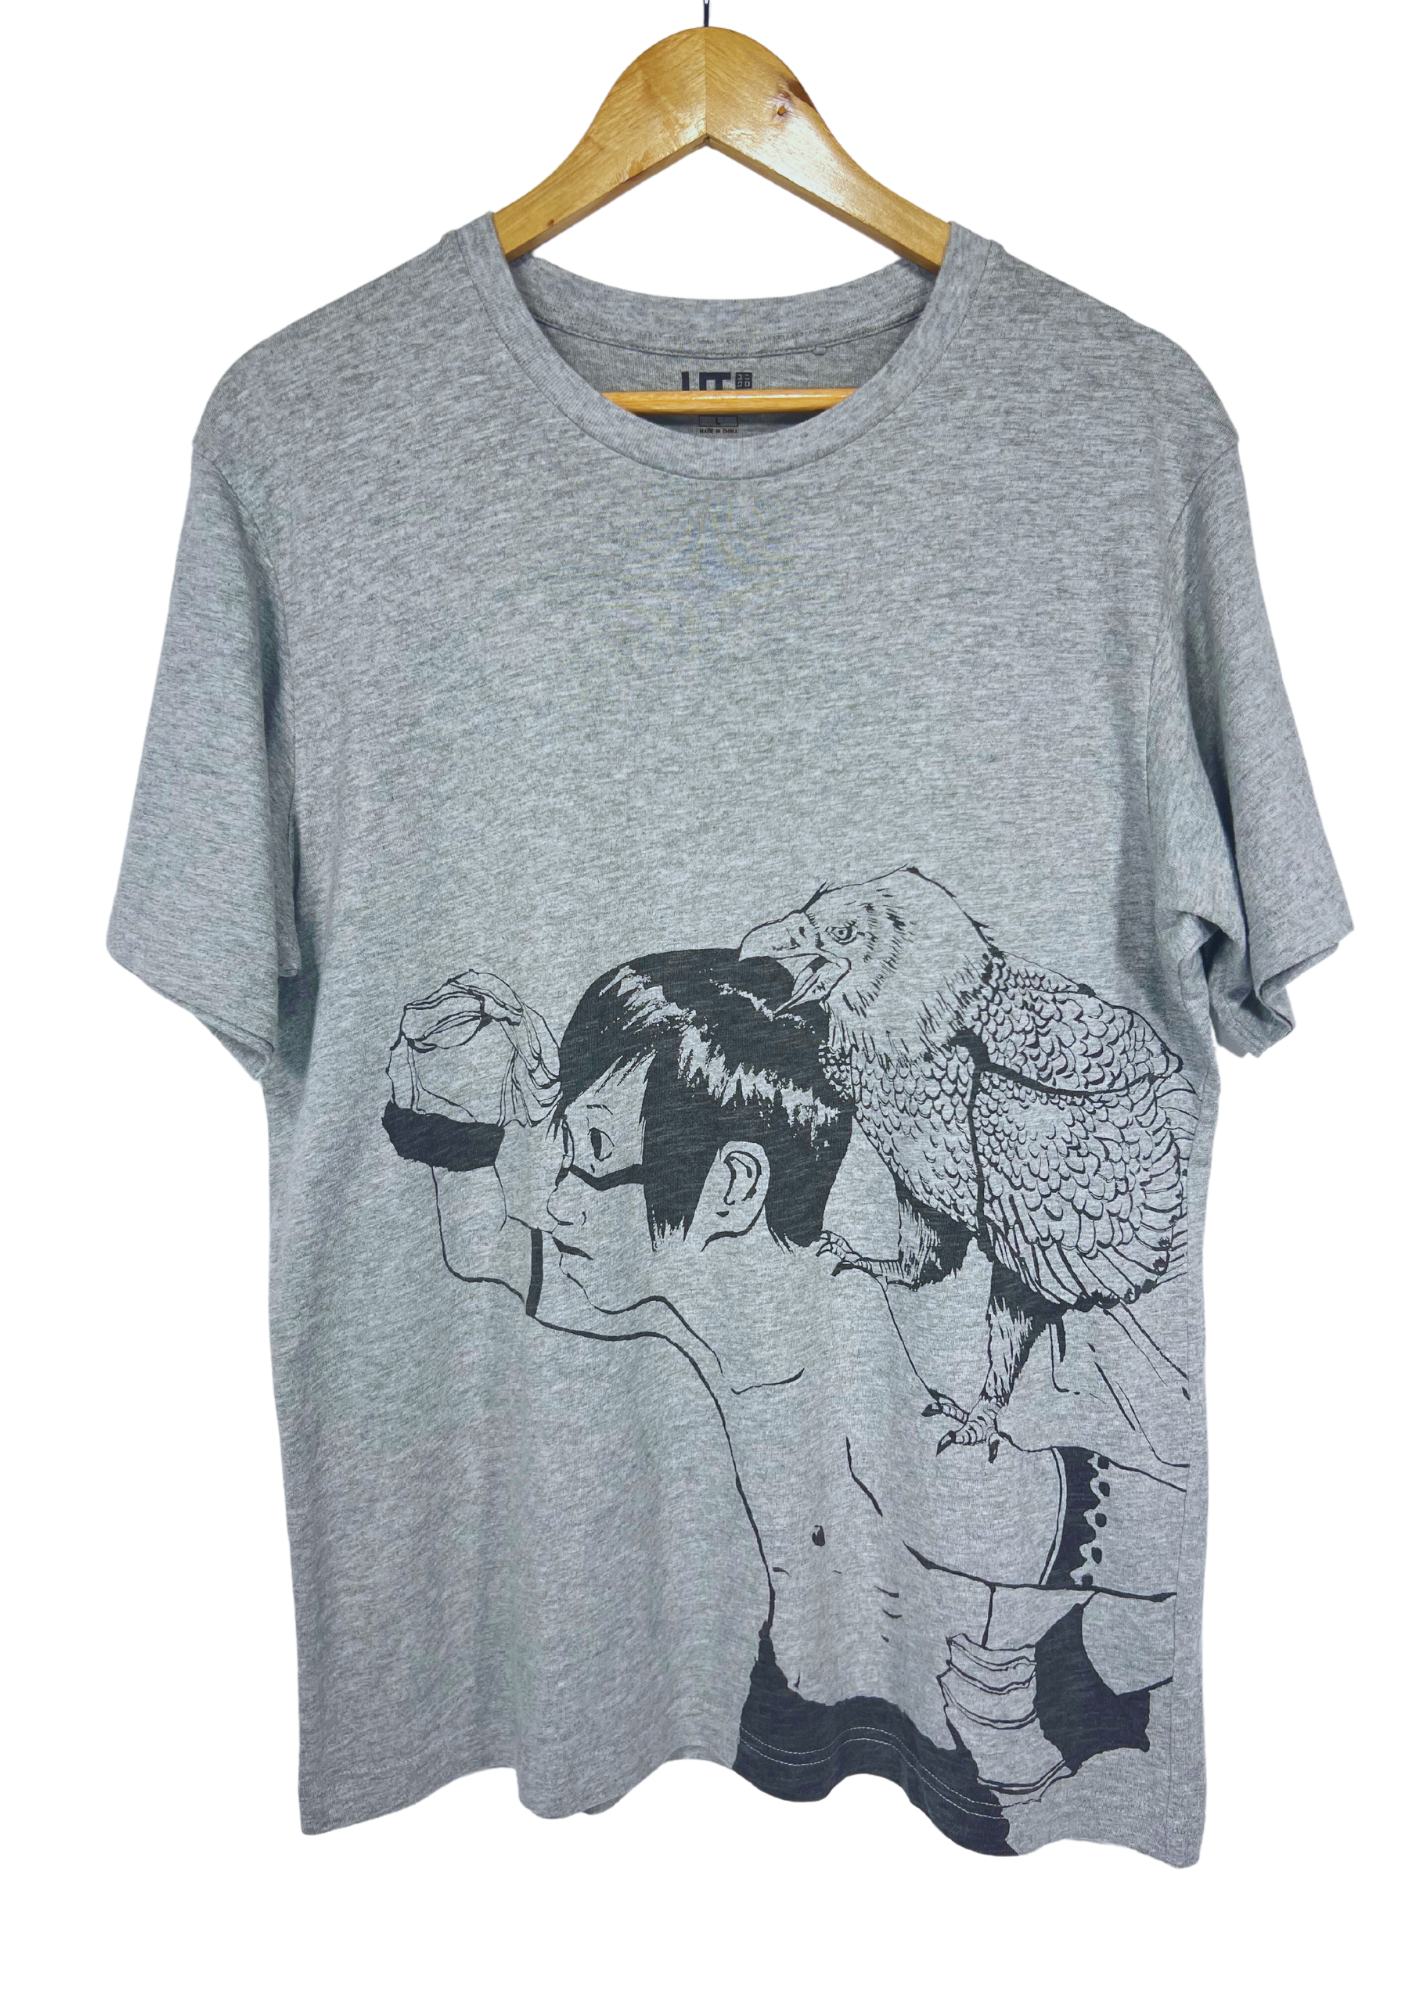 Taiyo Matsumoto x UT x Nicolas de Crecy Graphic 2 T-shirt